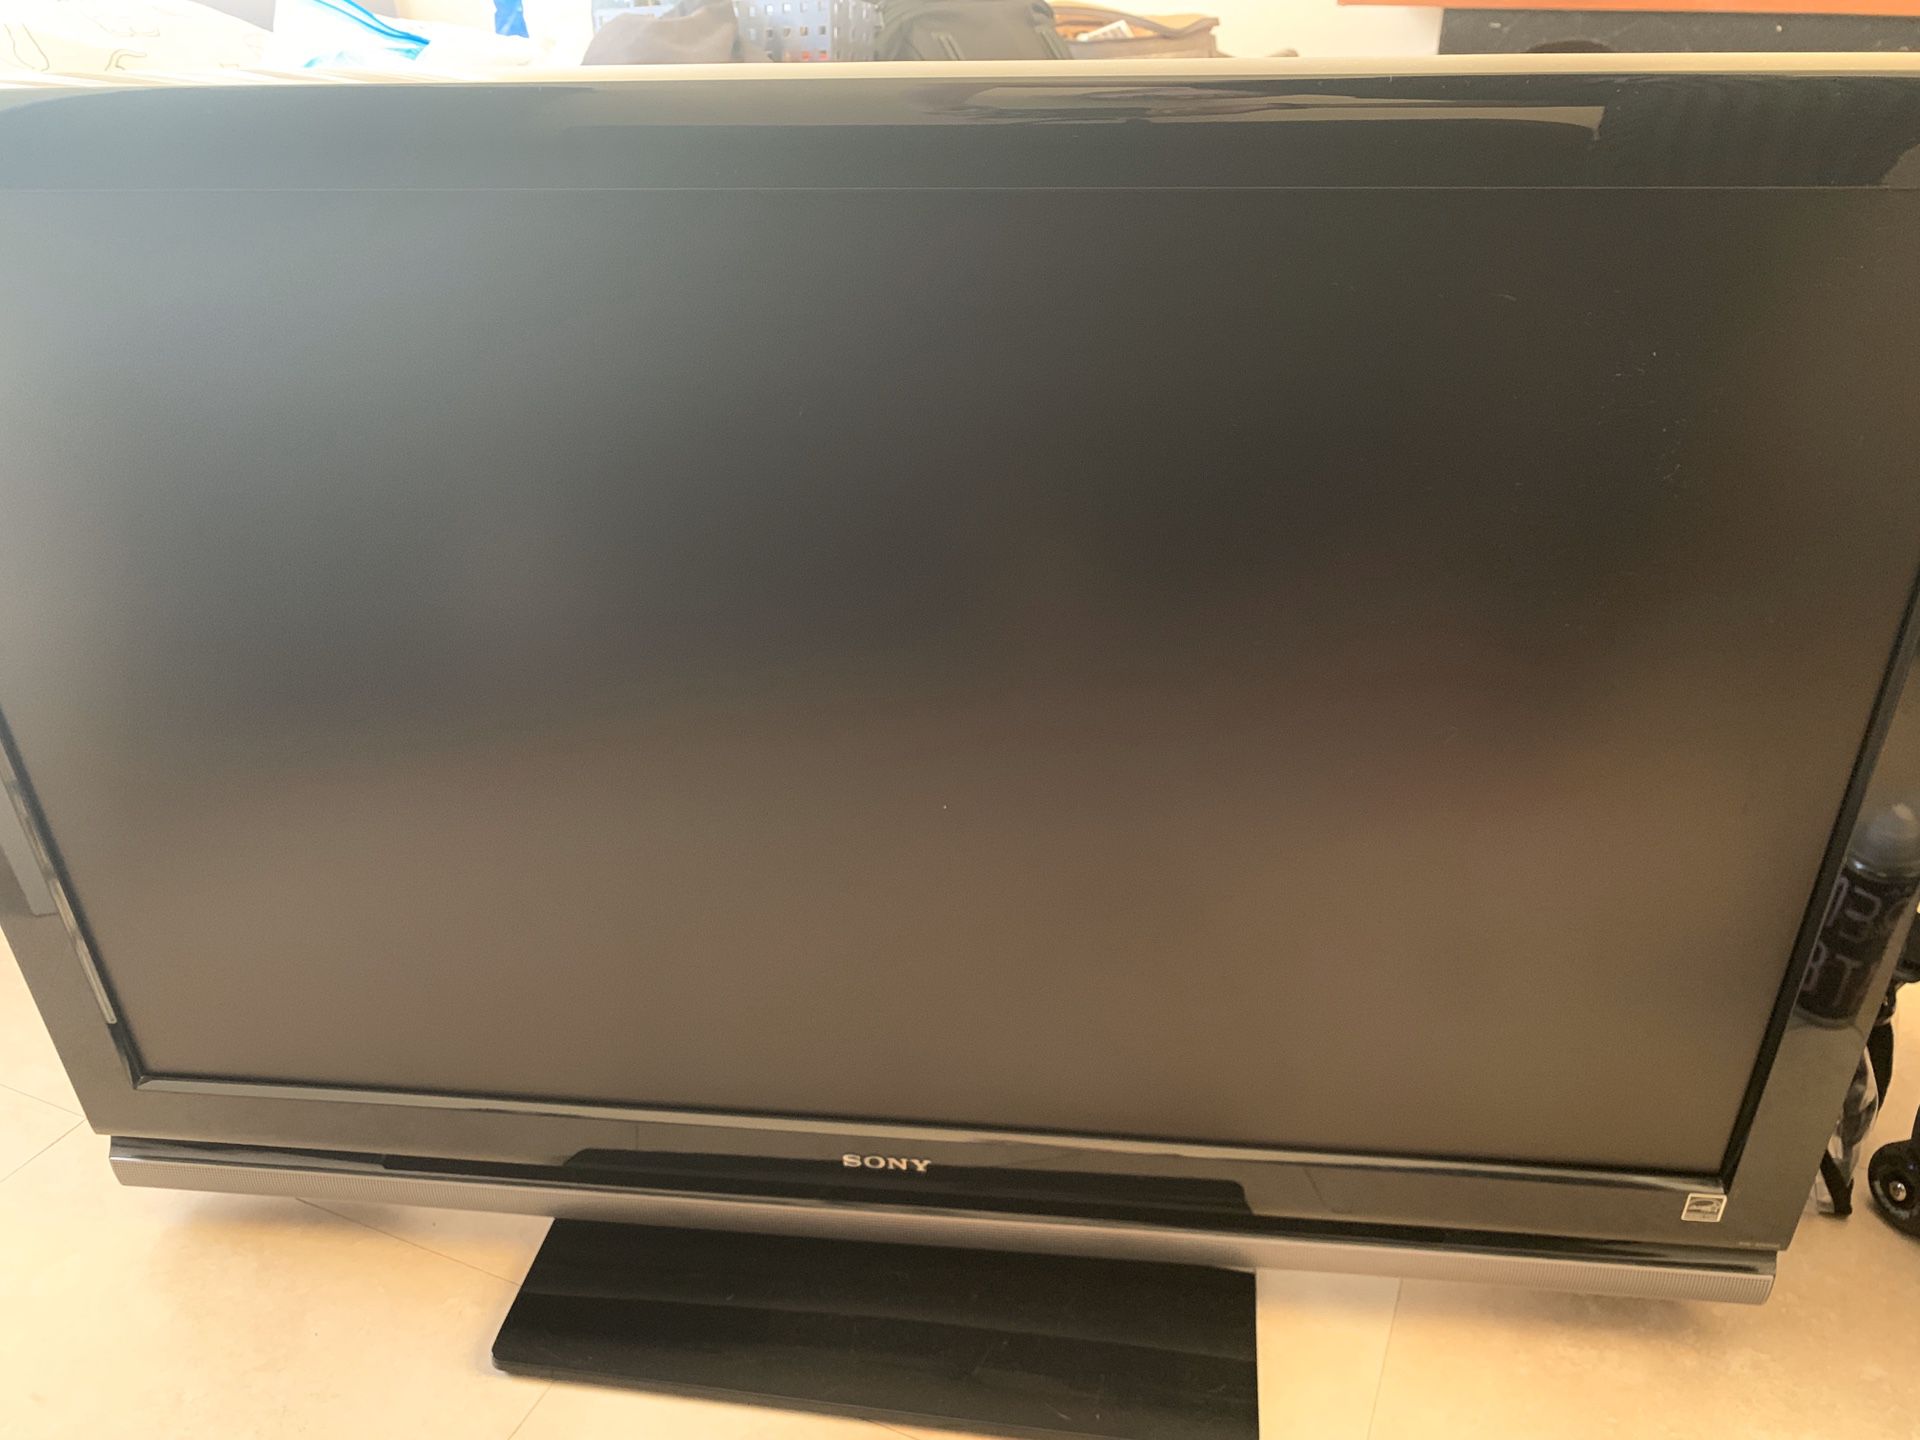 42” inch Sony Bravia TV LCD HDTV